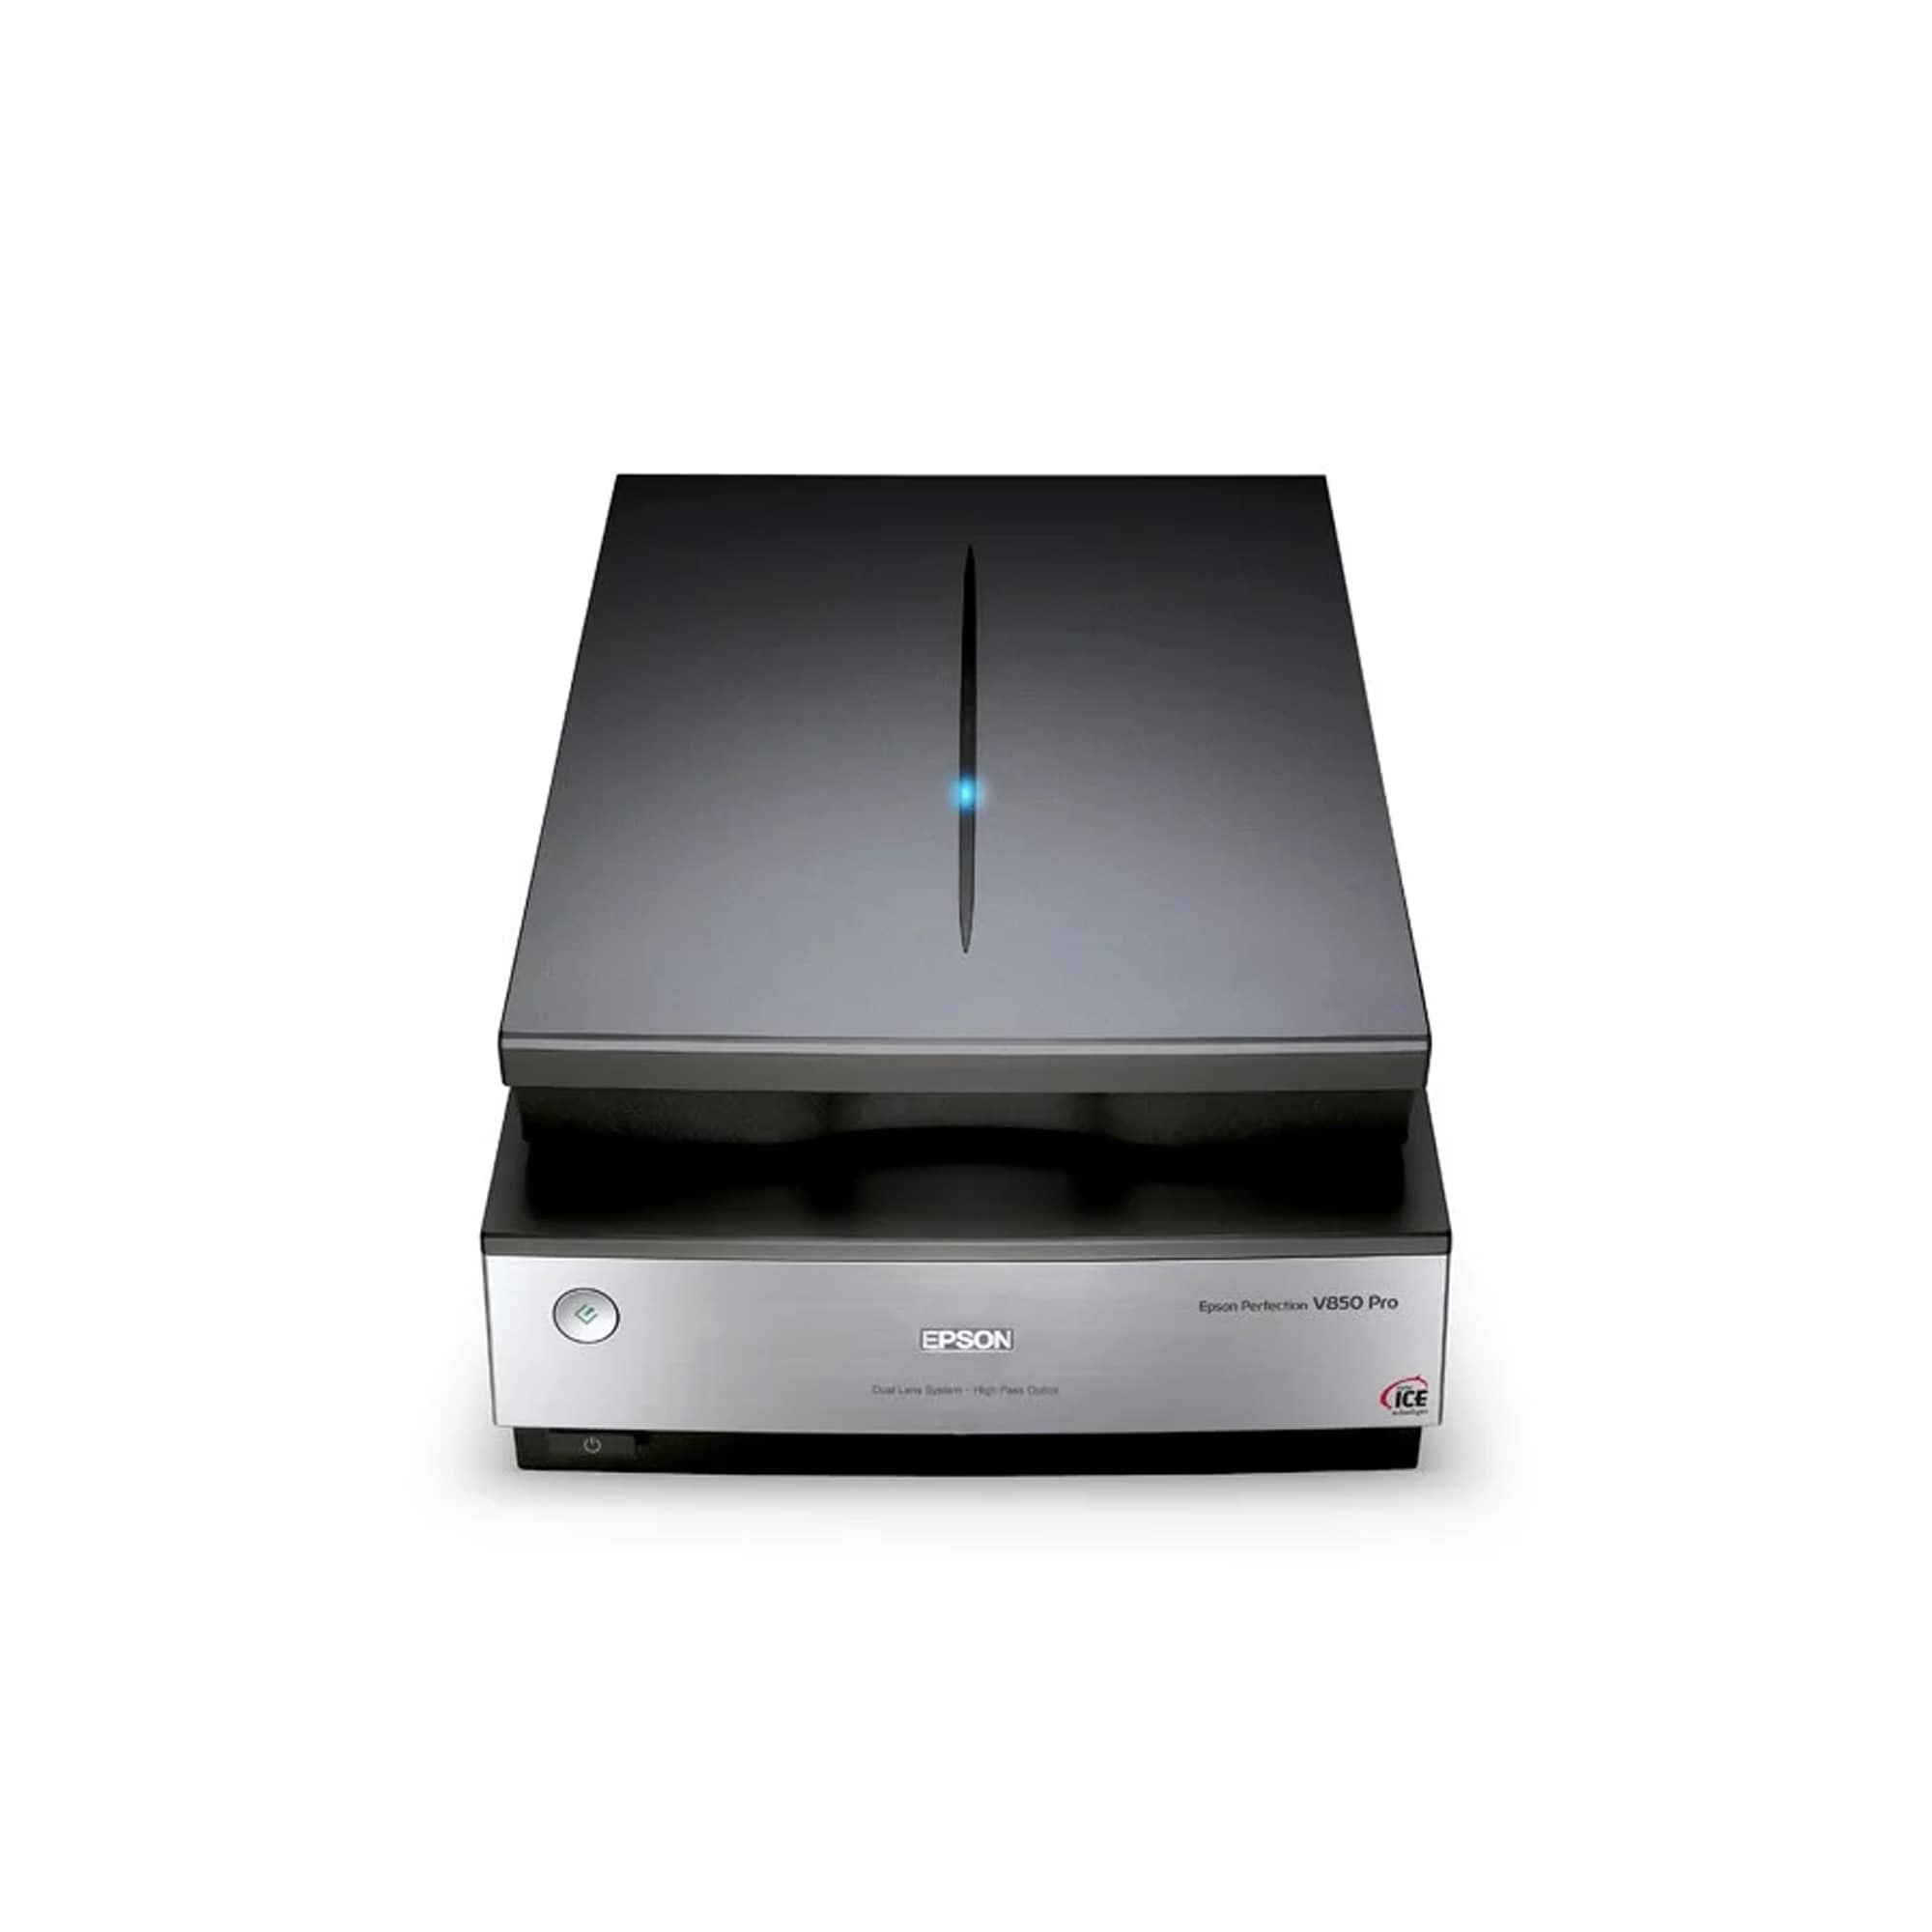 Epson Perfection V850 Pro scanner 